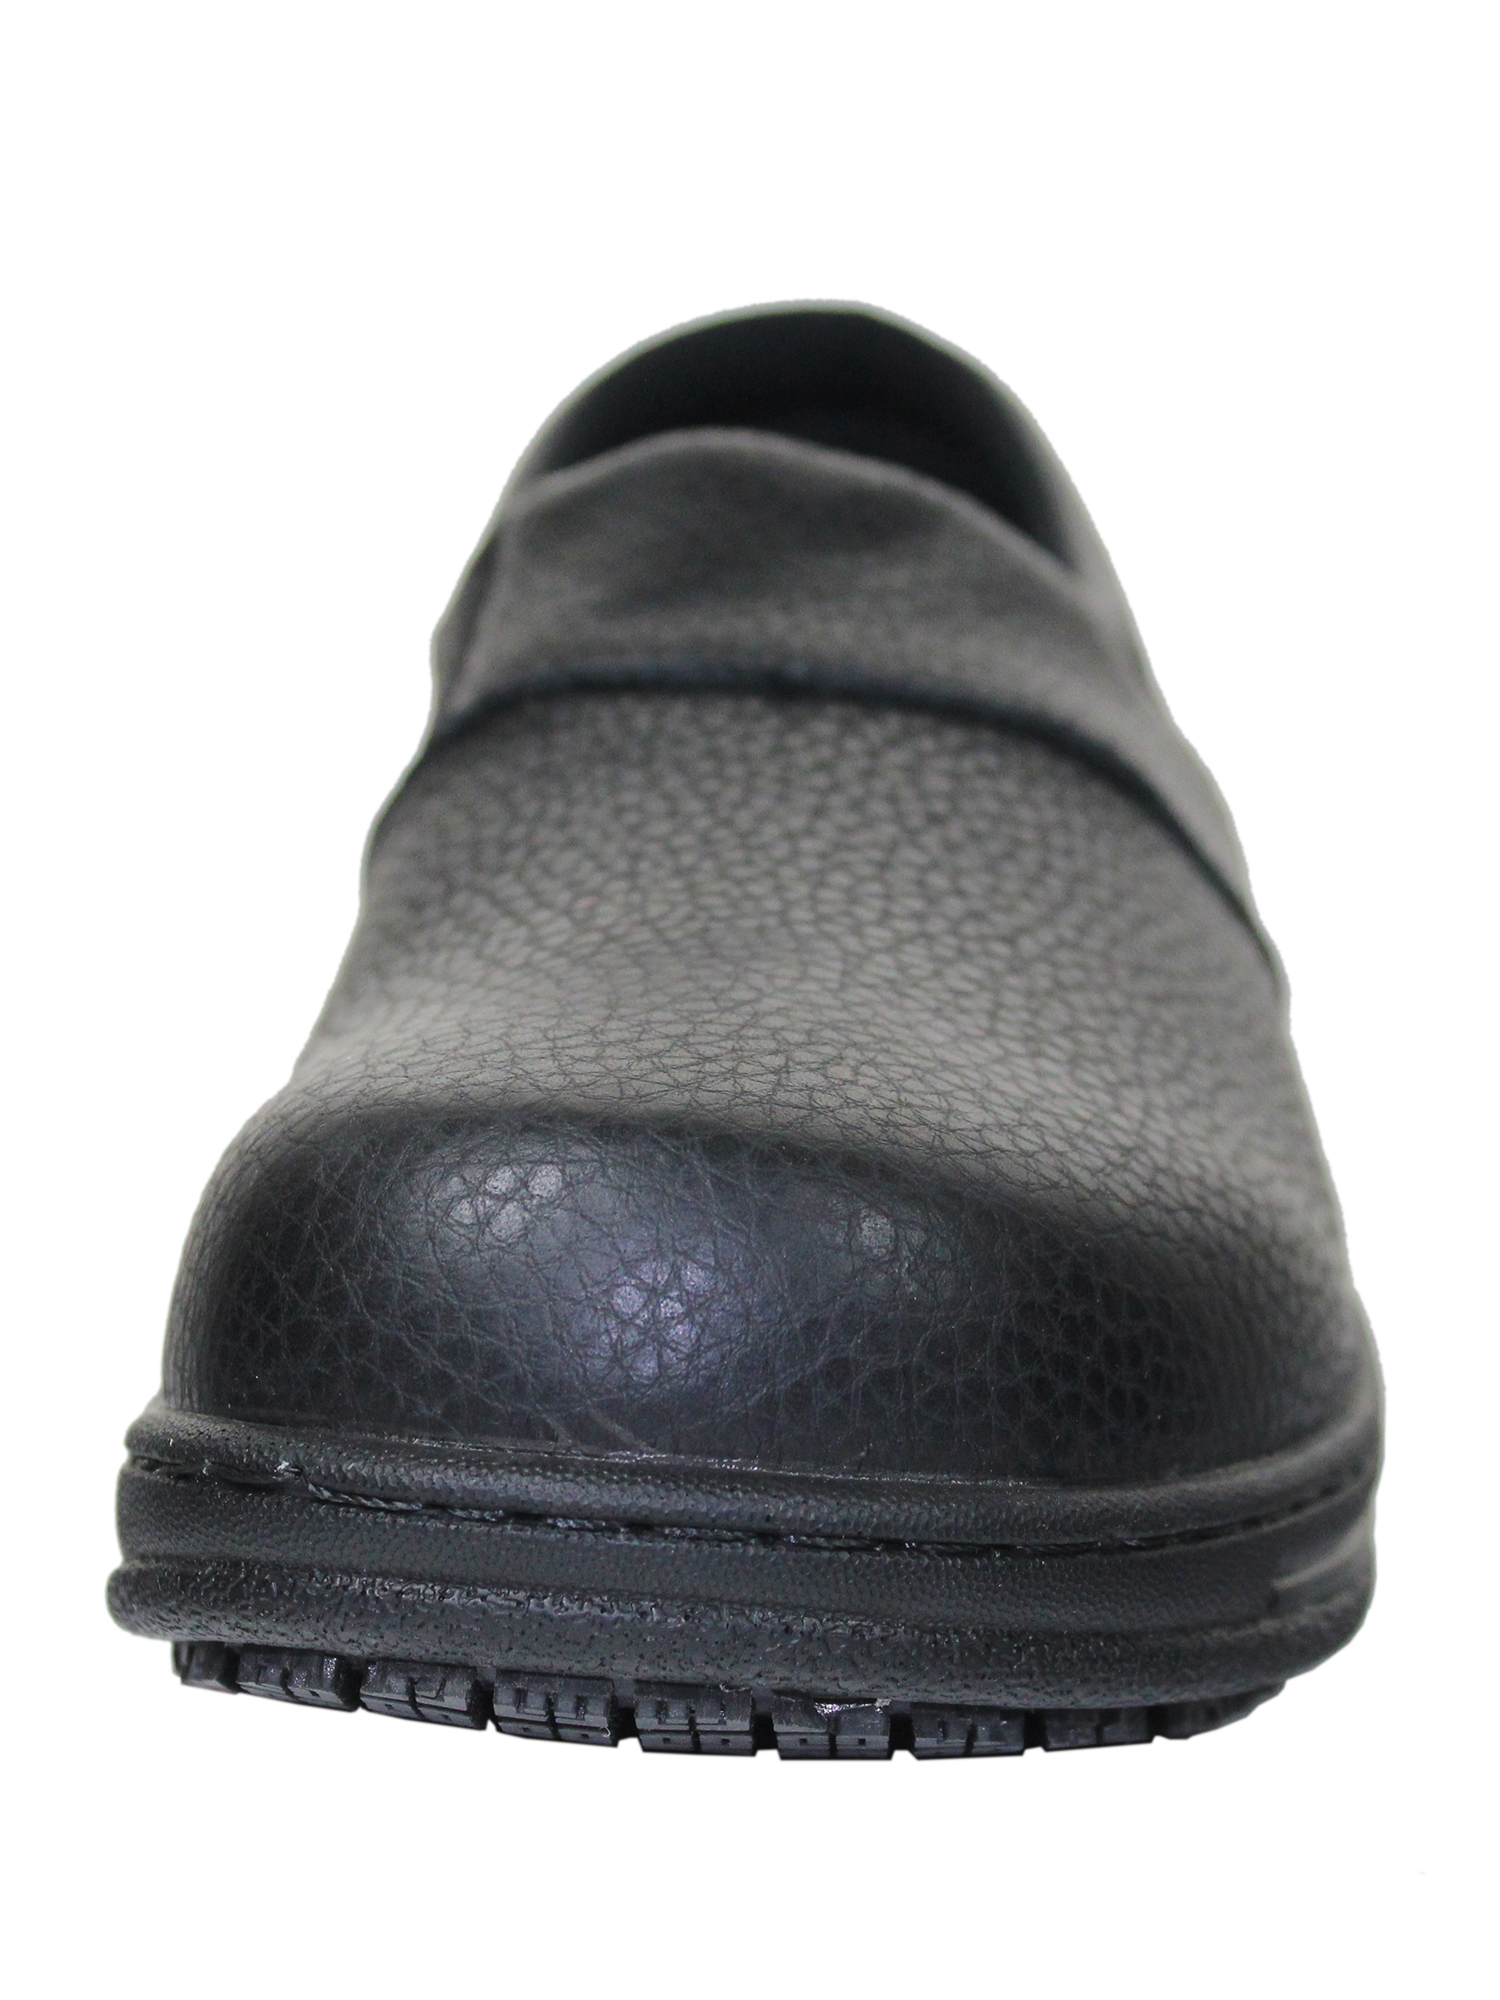 Tanleewa Women's Slip Resistant Work Shoes Waterproof Casual Lightweight Shoe Size 9.5 Adult Male - image 3 of 5